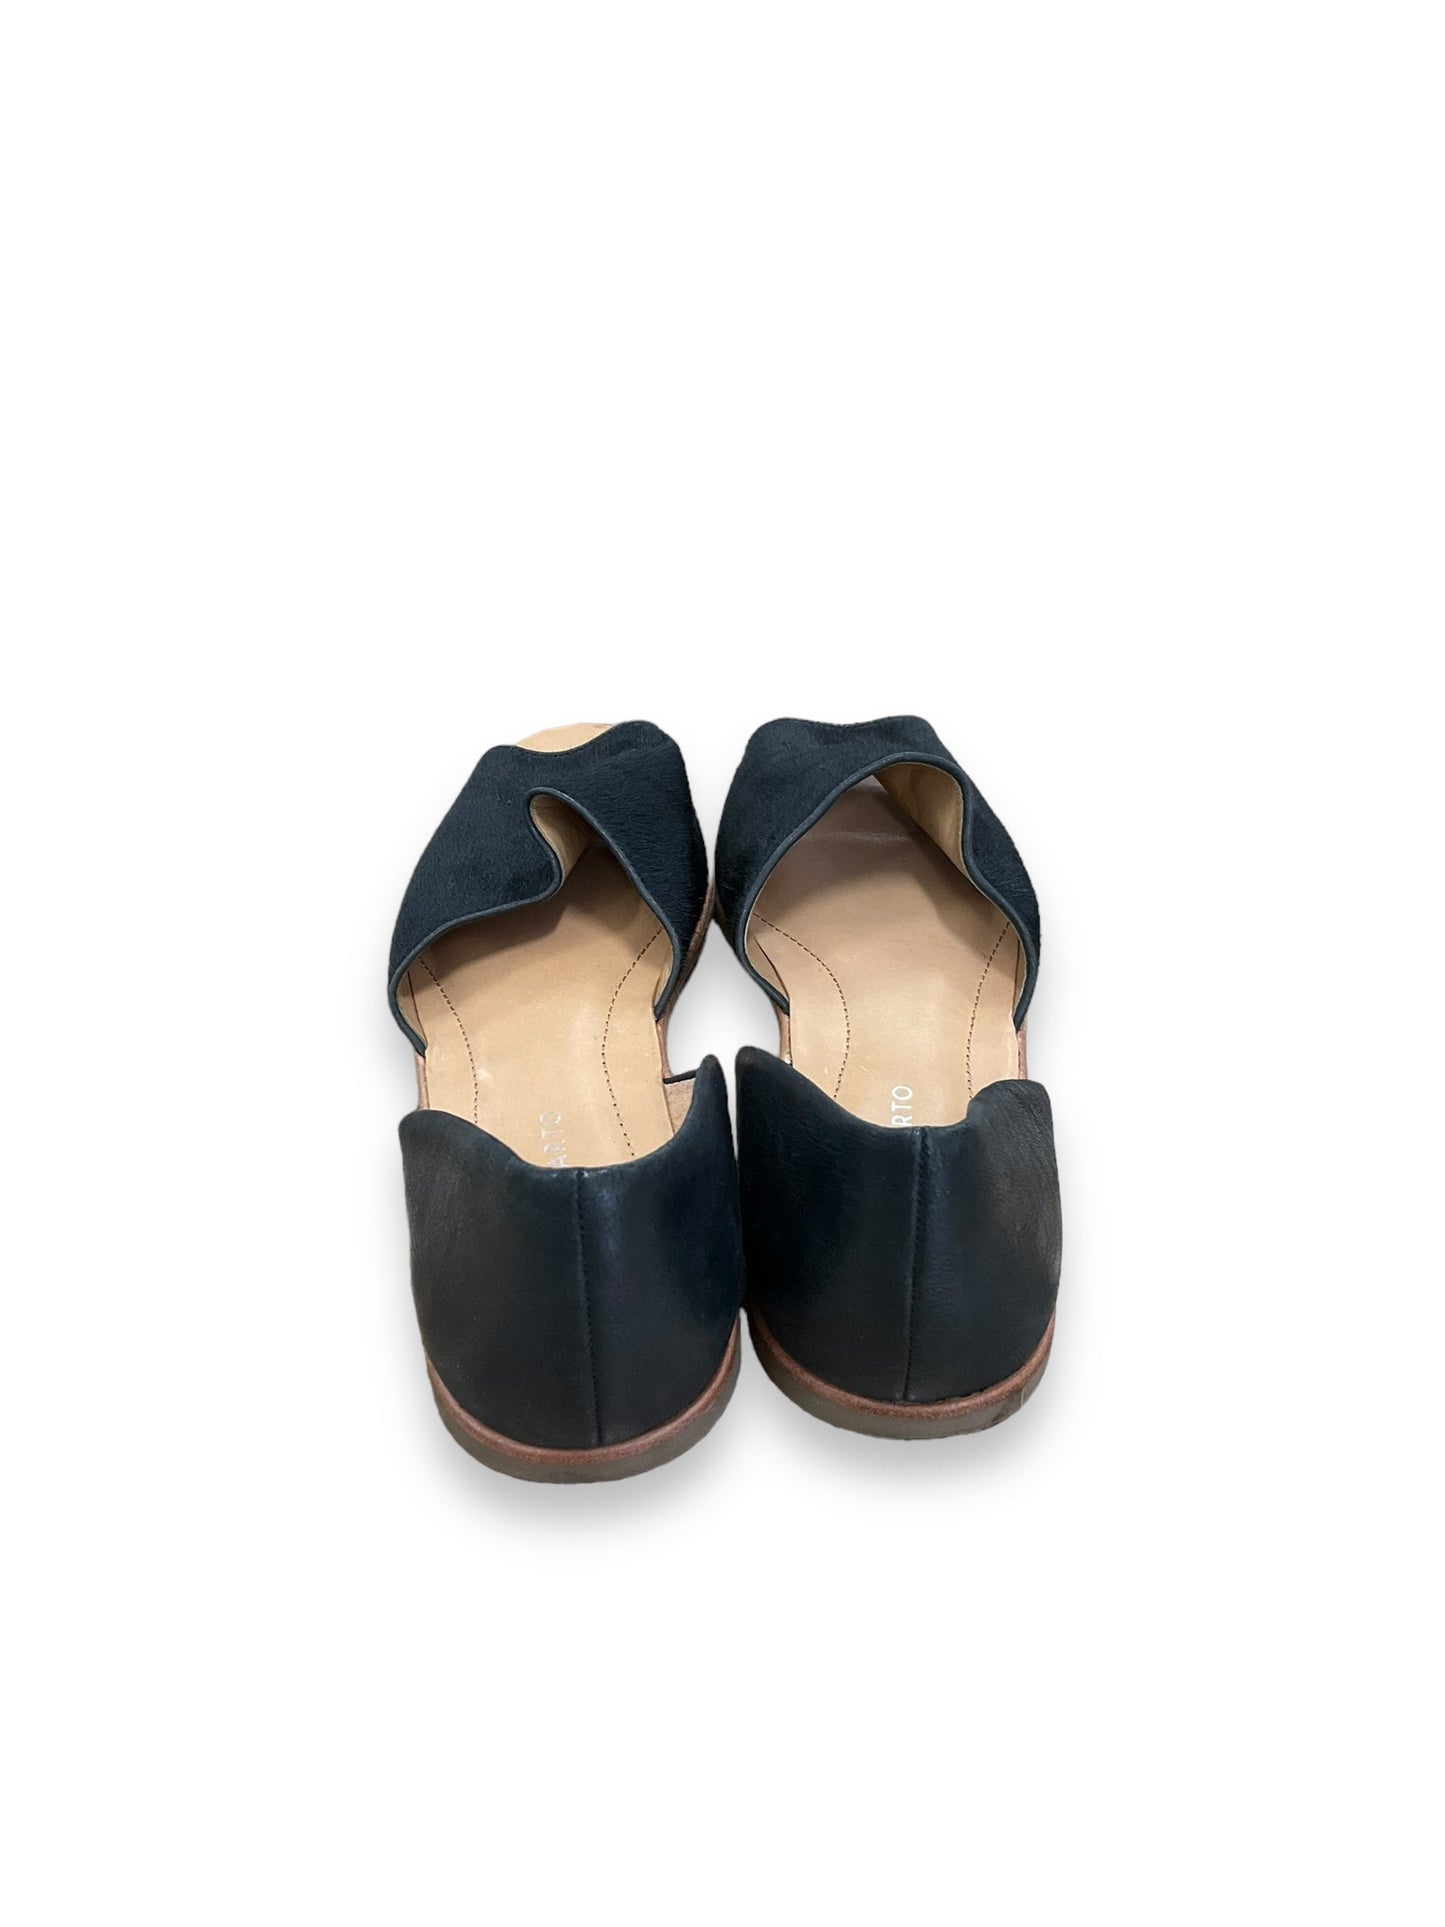 Black Shoes Flats Franco Sarto, Size 9